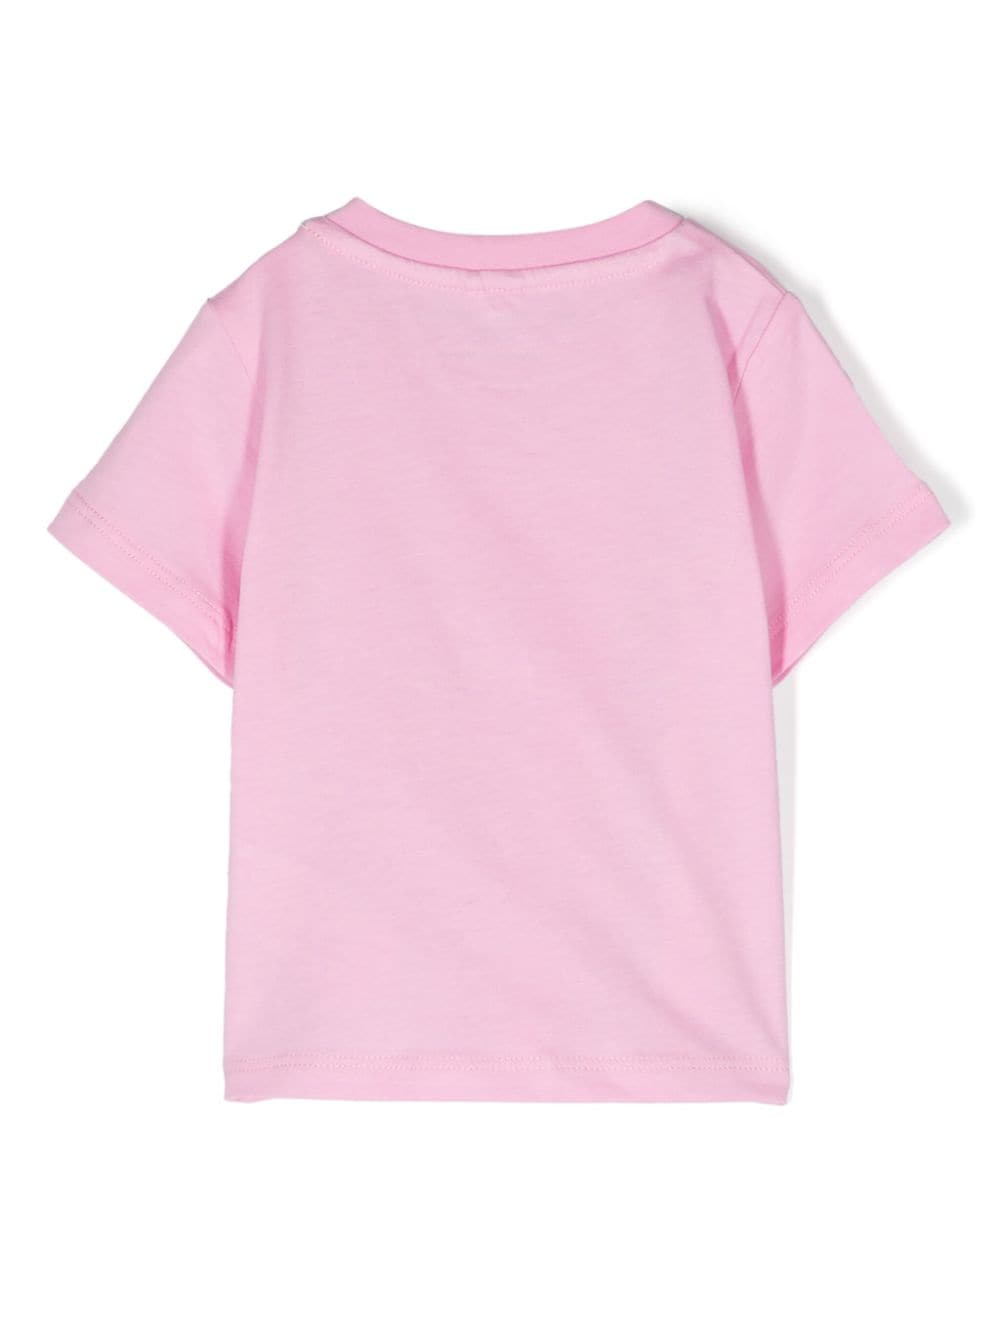 t-shirt bébé rose